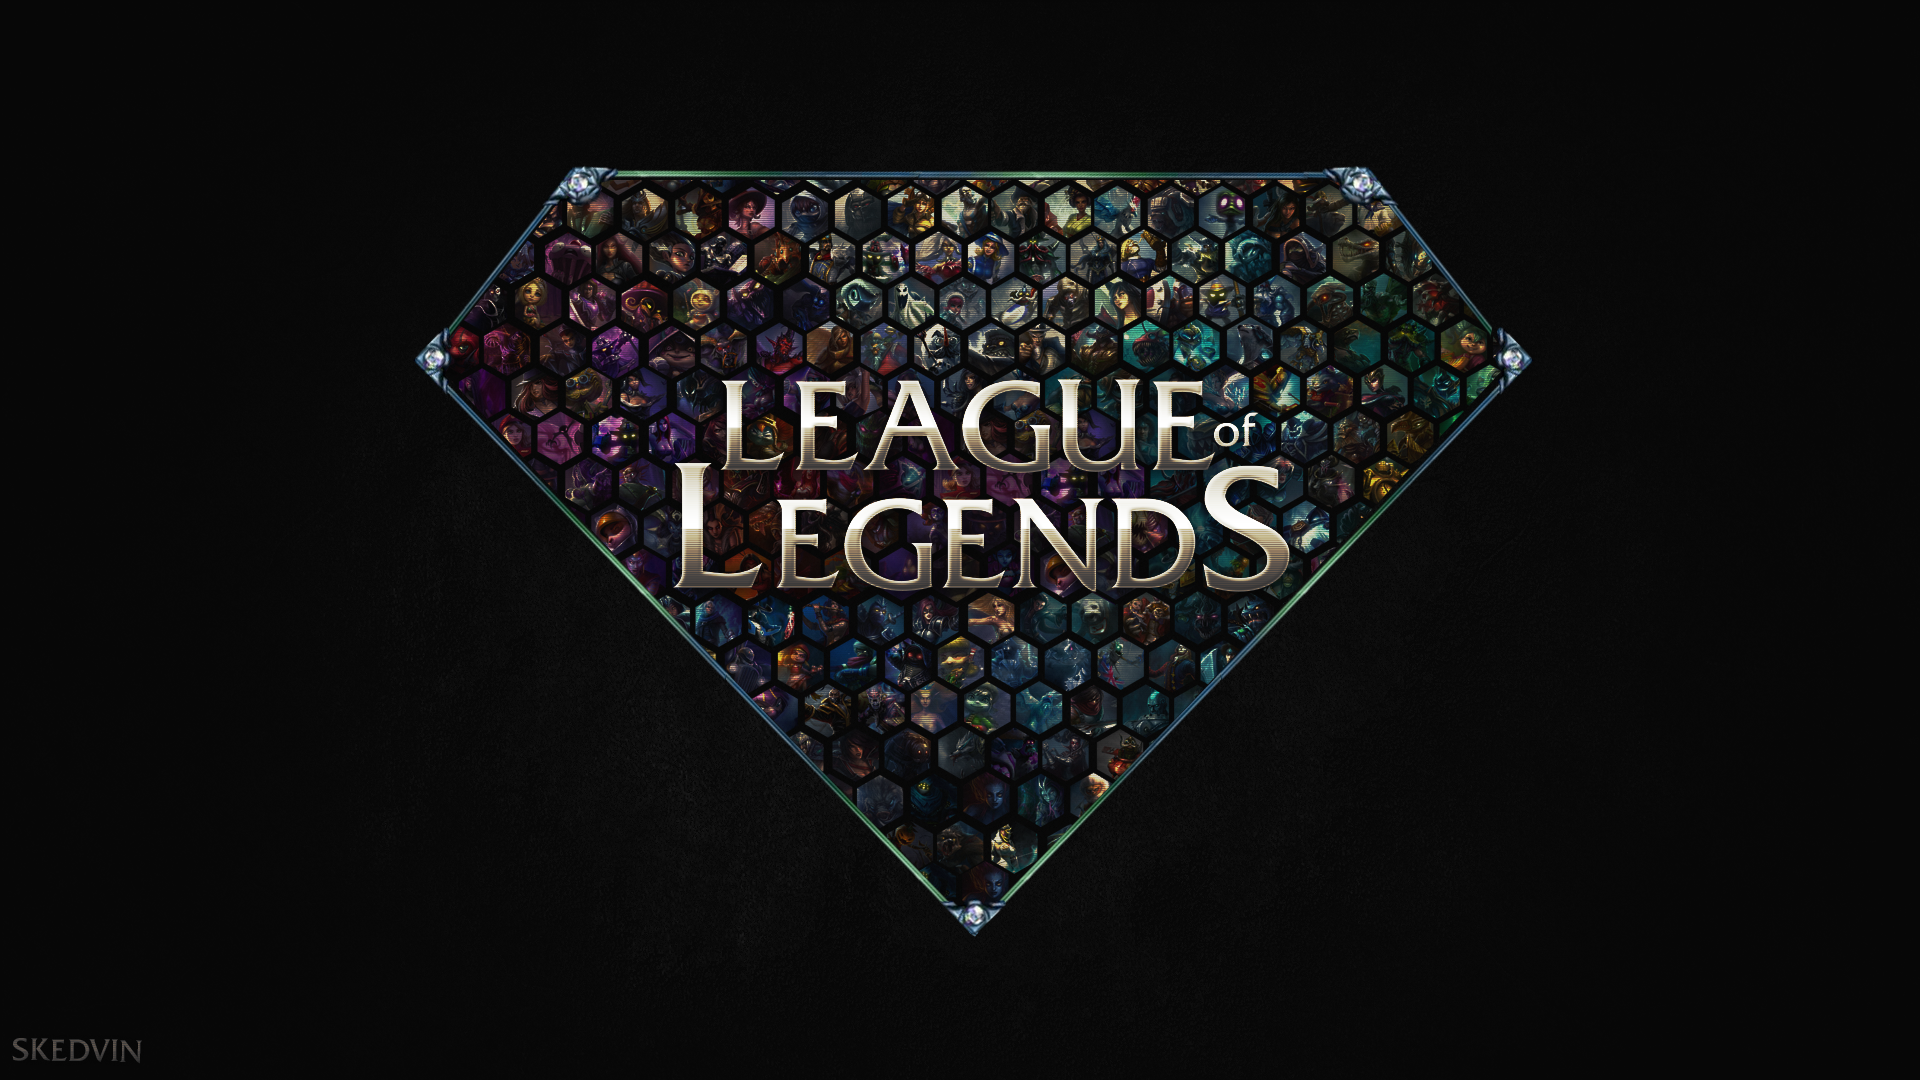 League of Legends wallpaper [19201080p] HD by SKEDVIN 1920x1080